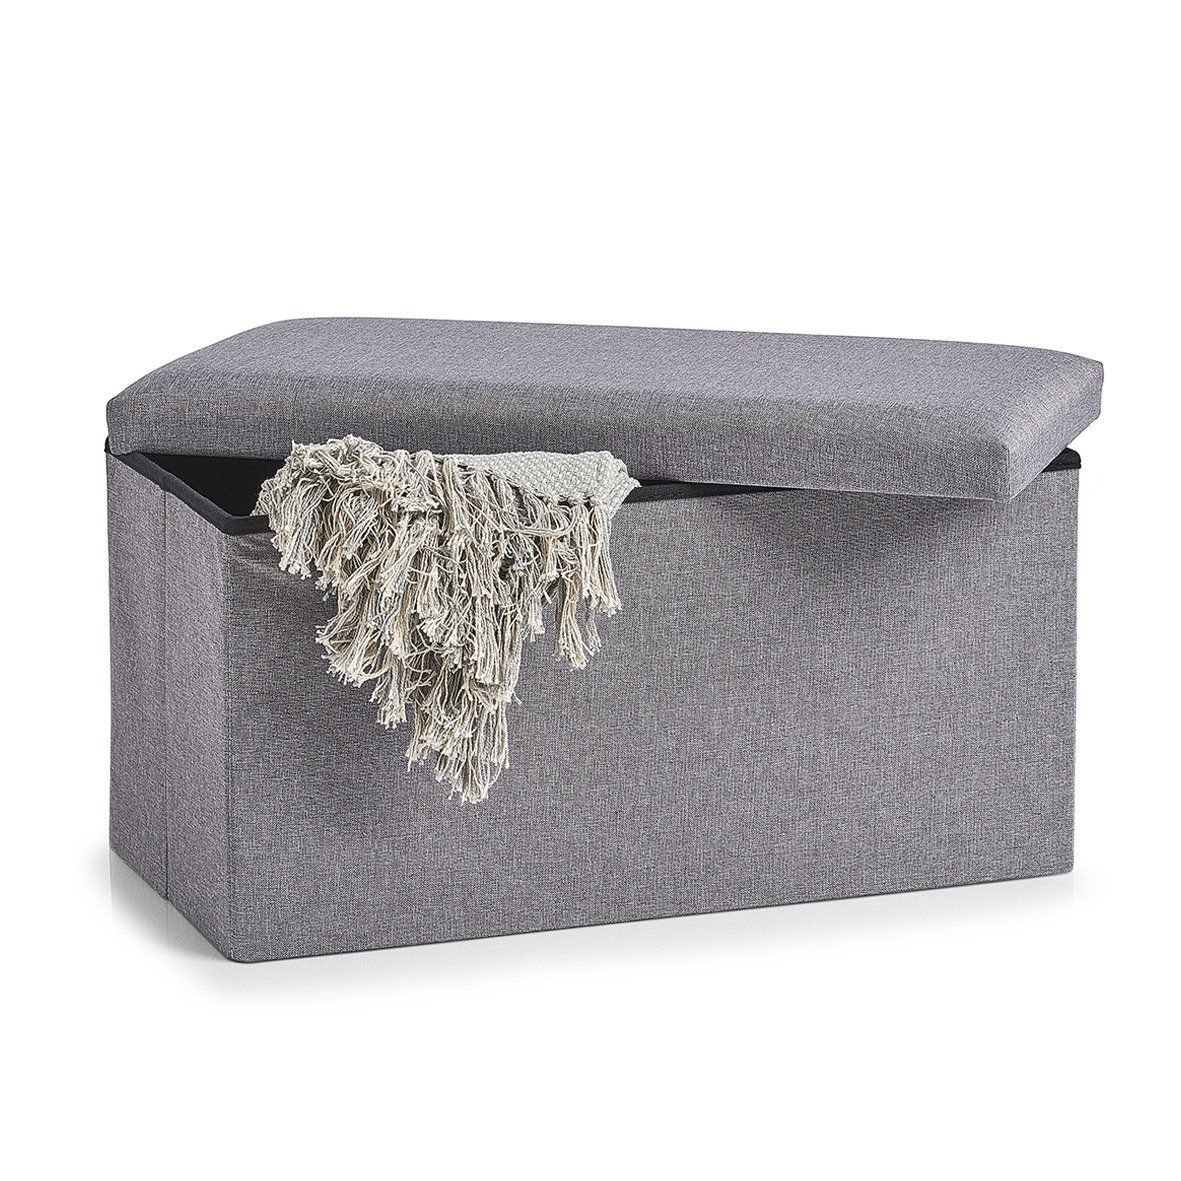 Skládací box, textilní pufa, 2 v 1, barva šedá, ZELLER - EDAXO.CZ s.r.o.